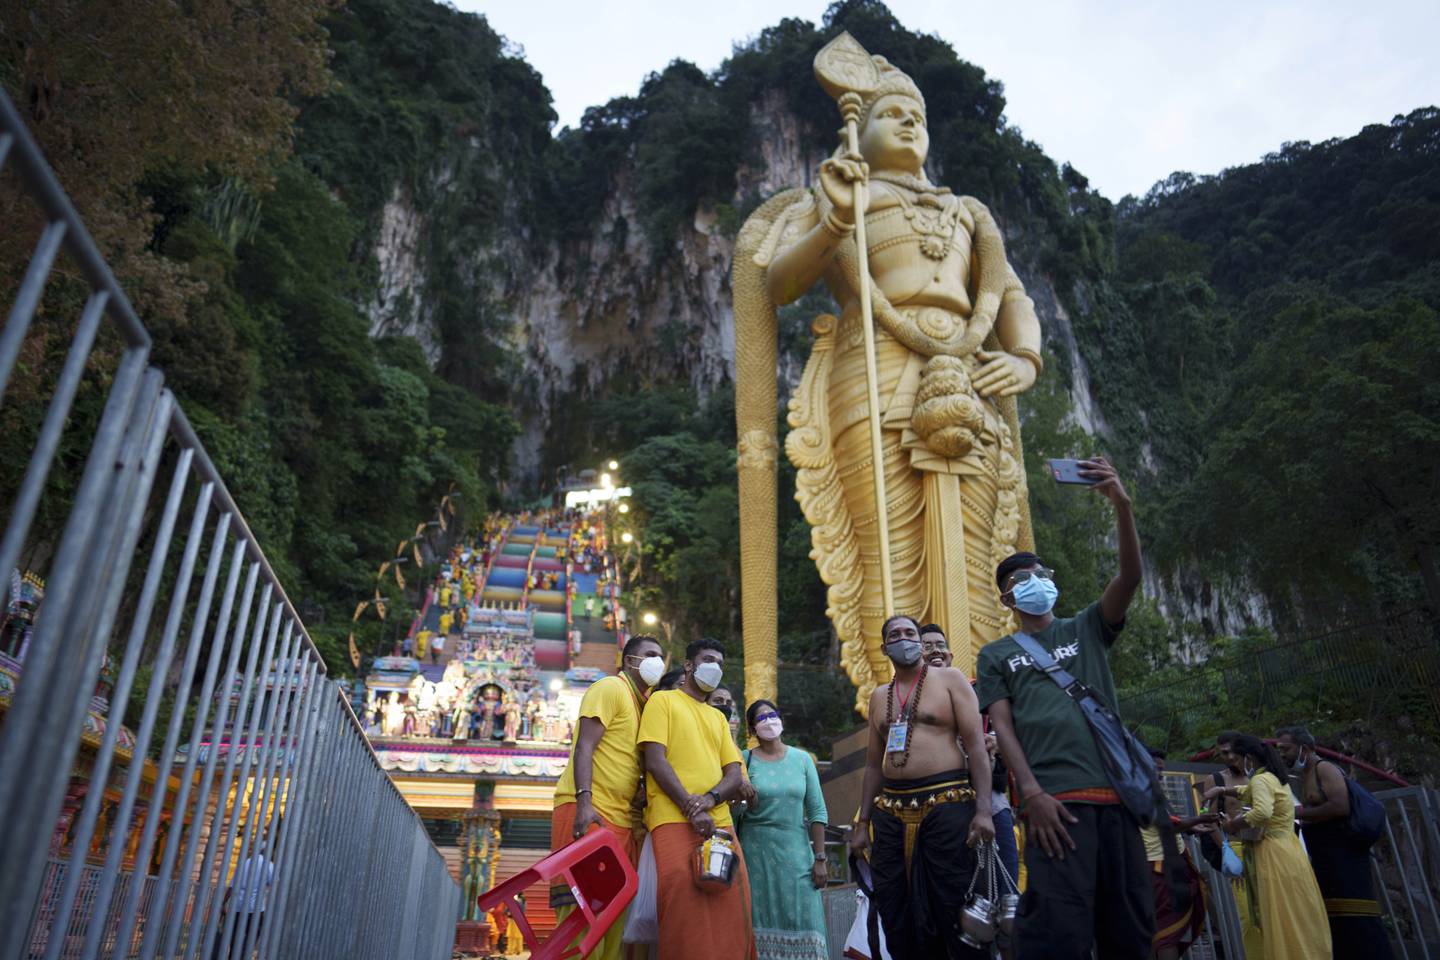 Hindu devotees celebrate the Thaipusam festival at Batu Caves on the outskirts of Kuala Lumpur last month. AP Photo